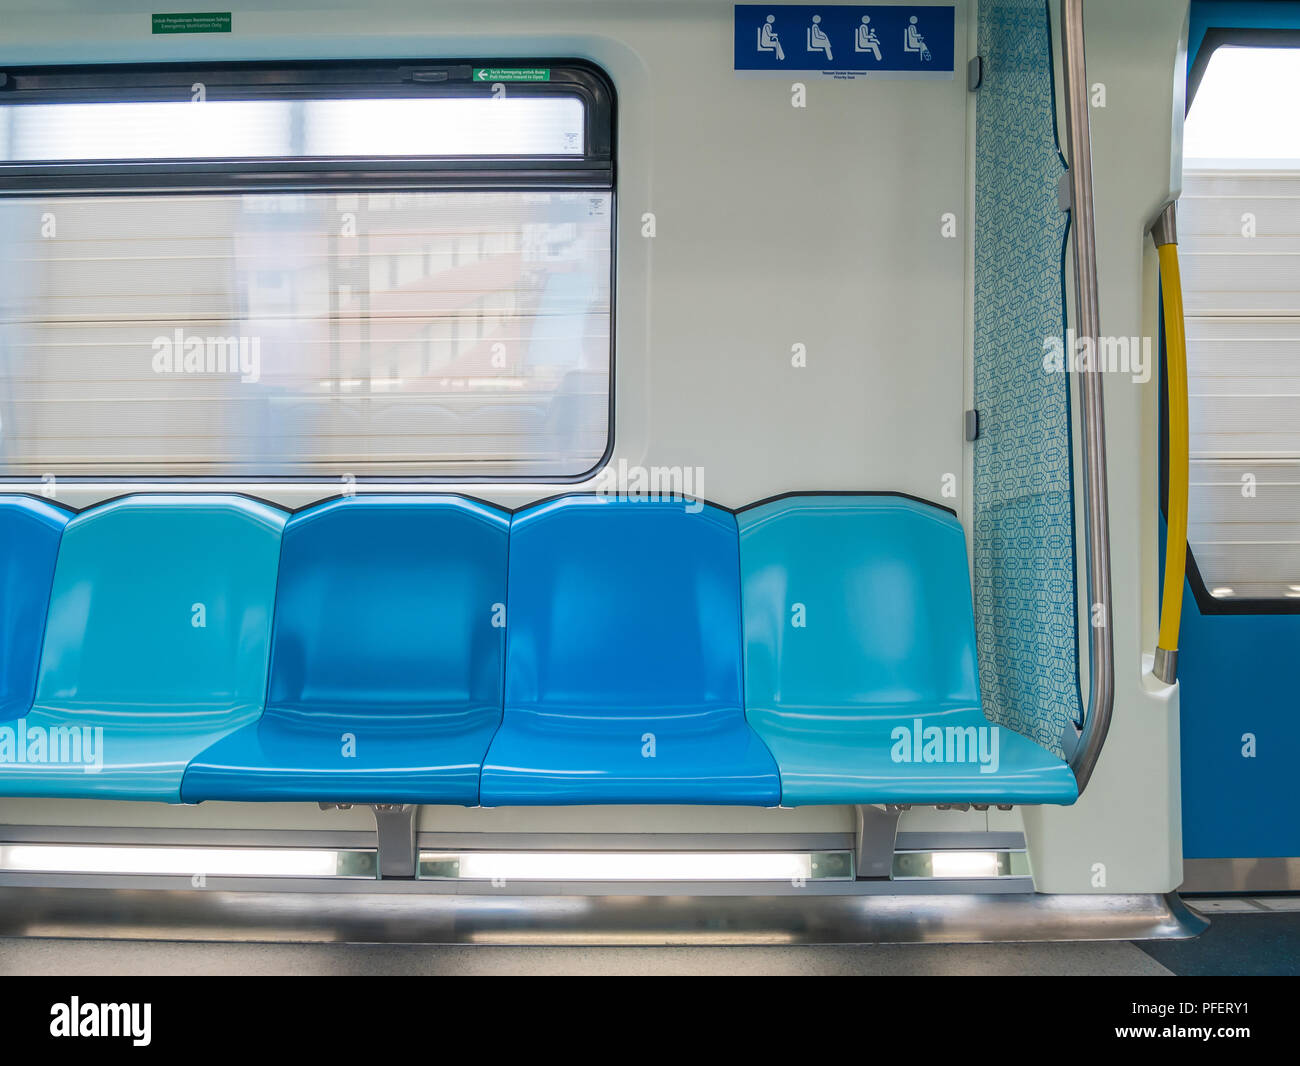 Malasia MRT (Mass Rapid Transit) asientos de prioridad. Foto de stock